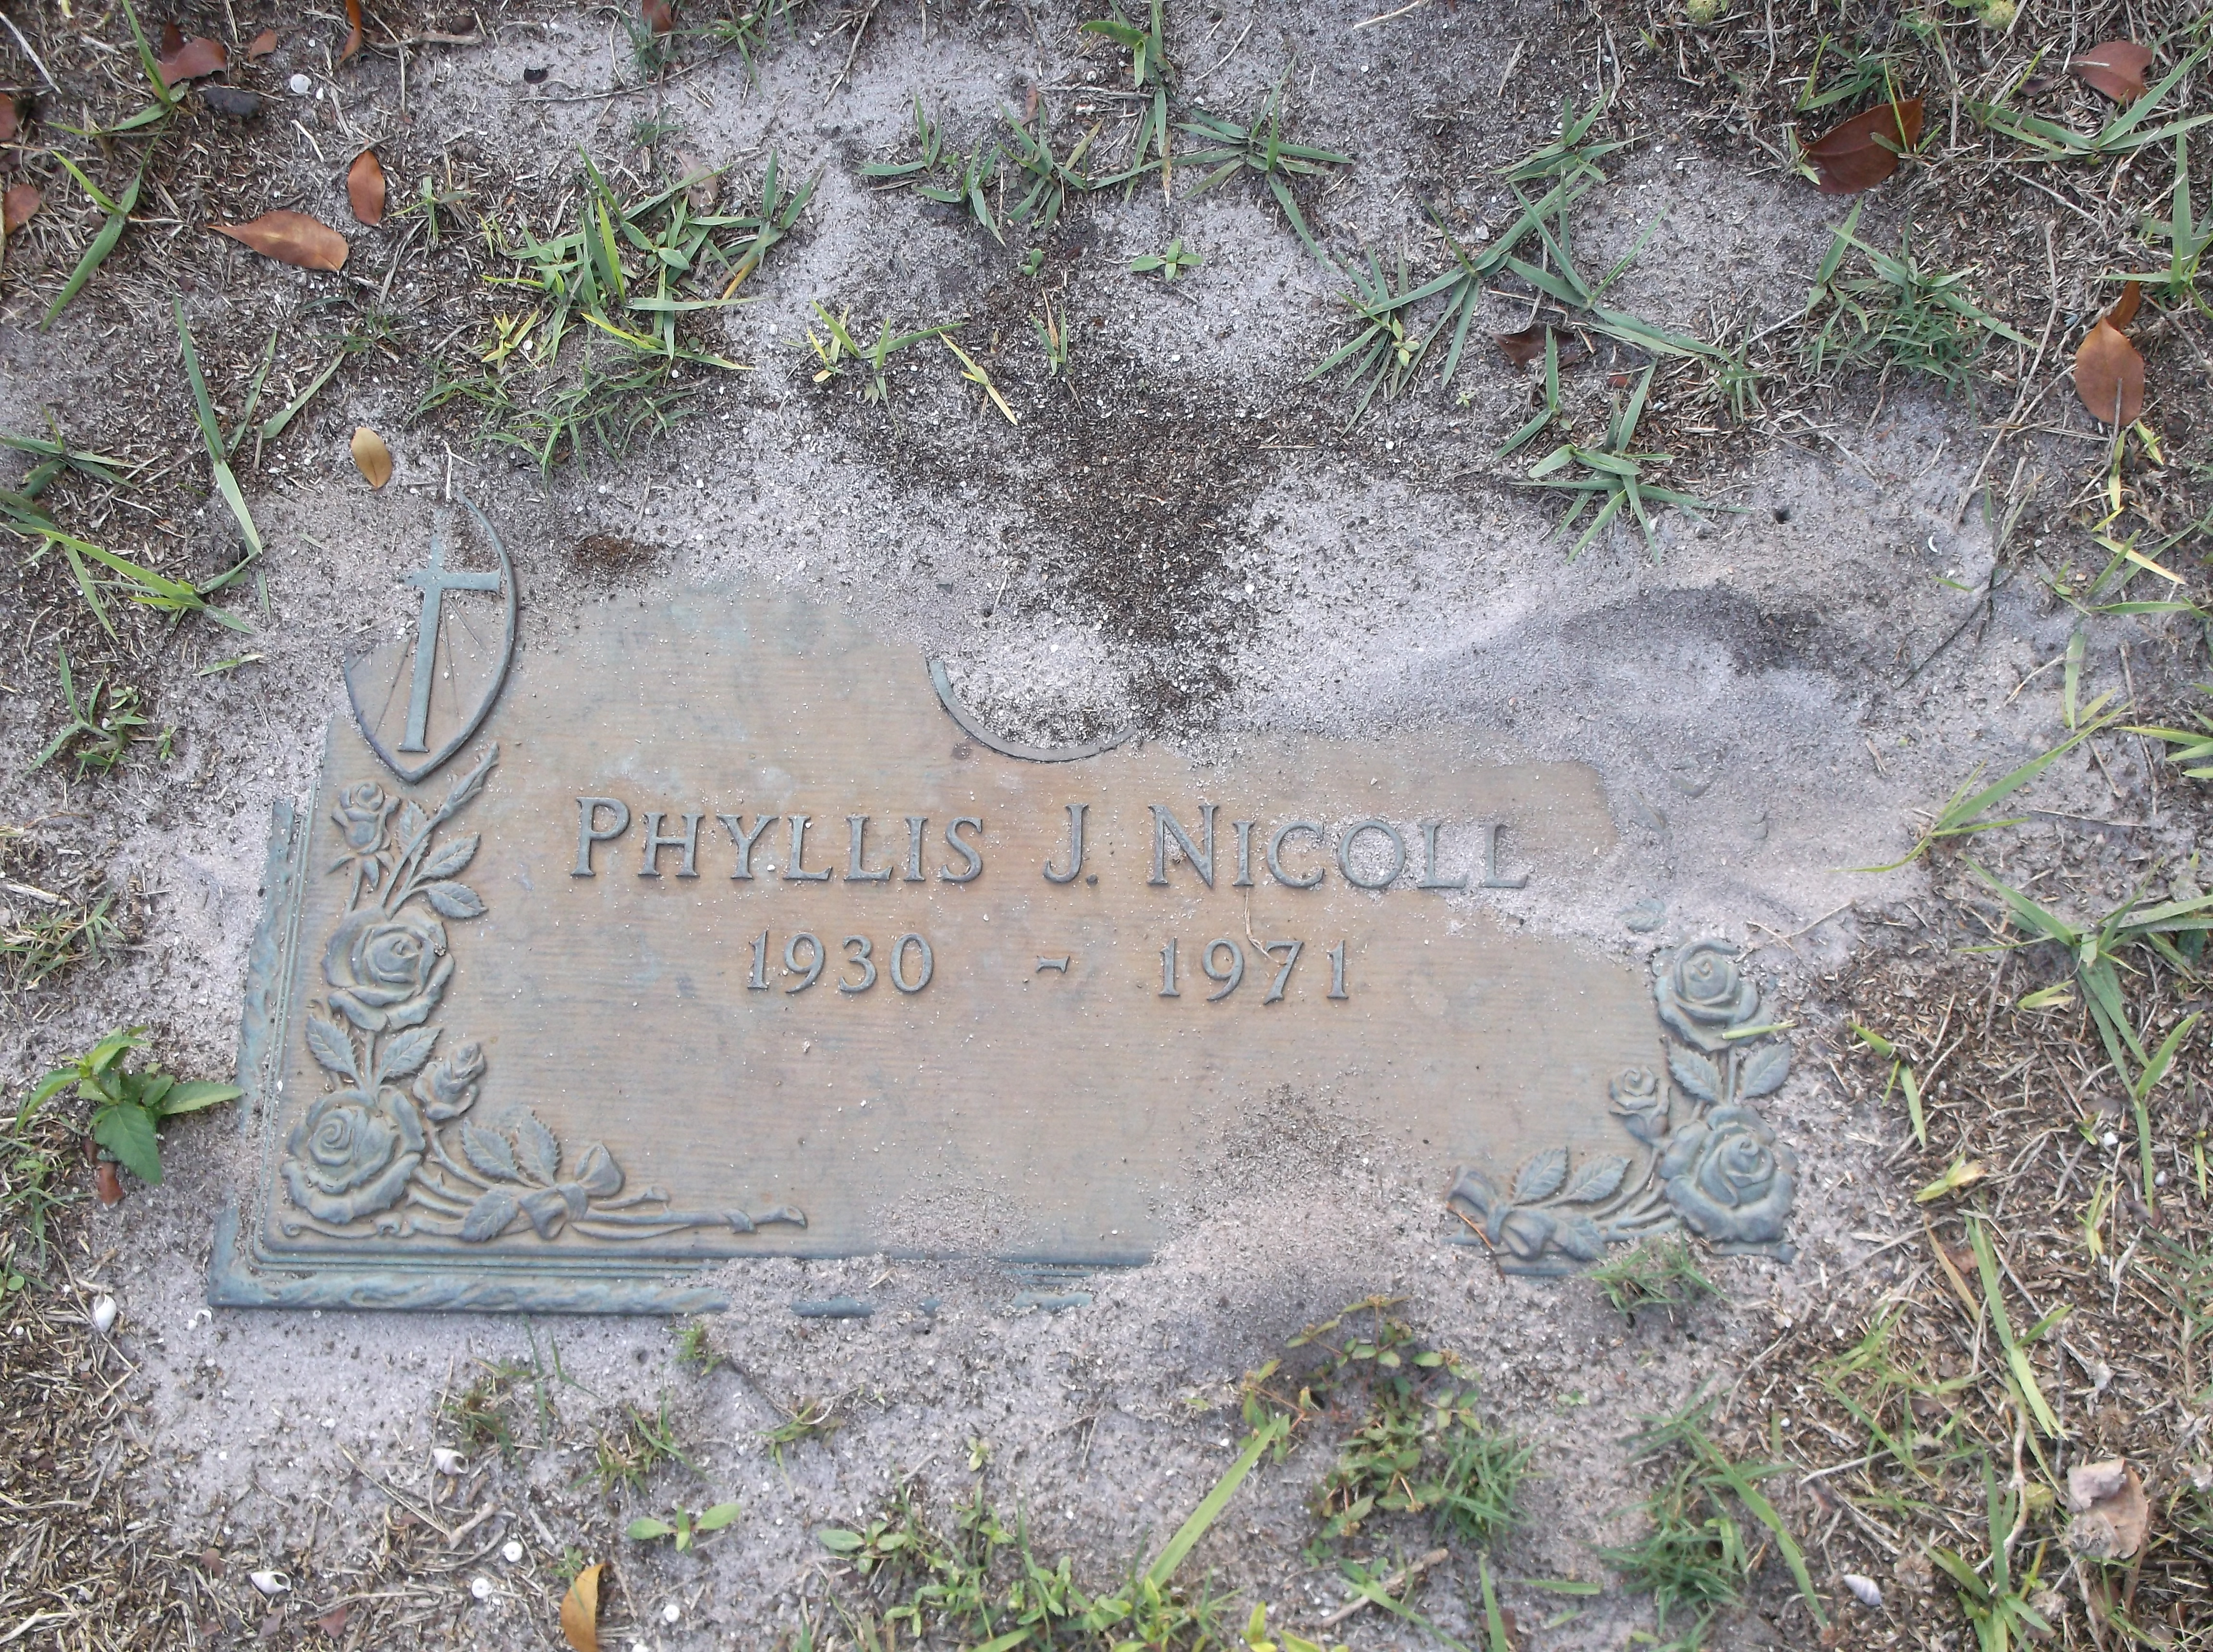 Phyllis J Nicoll